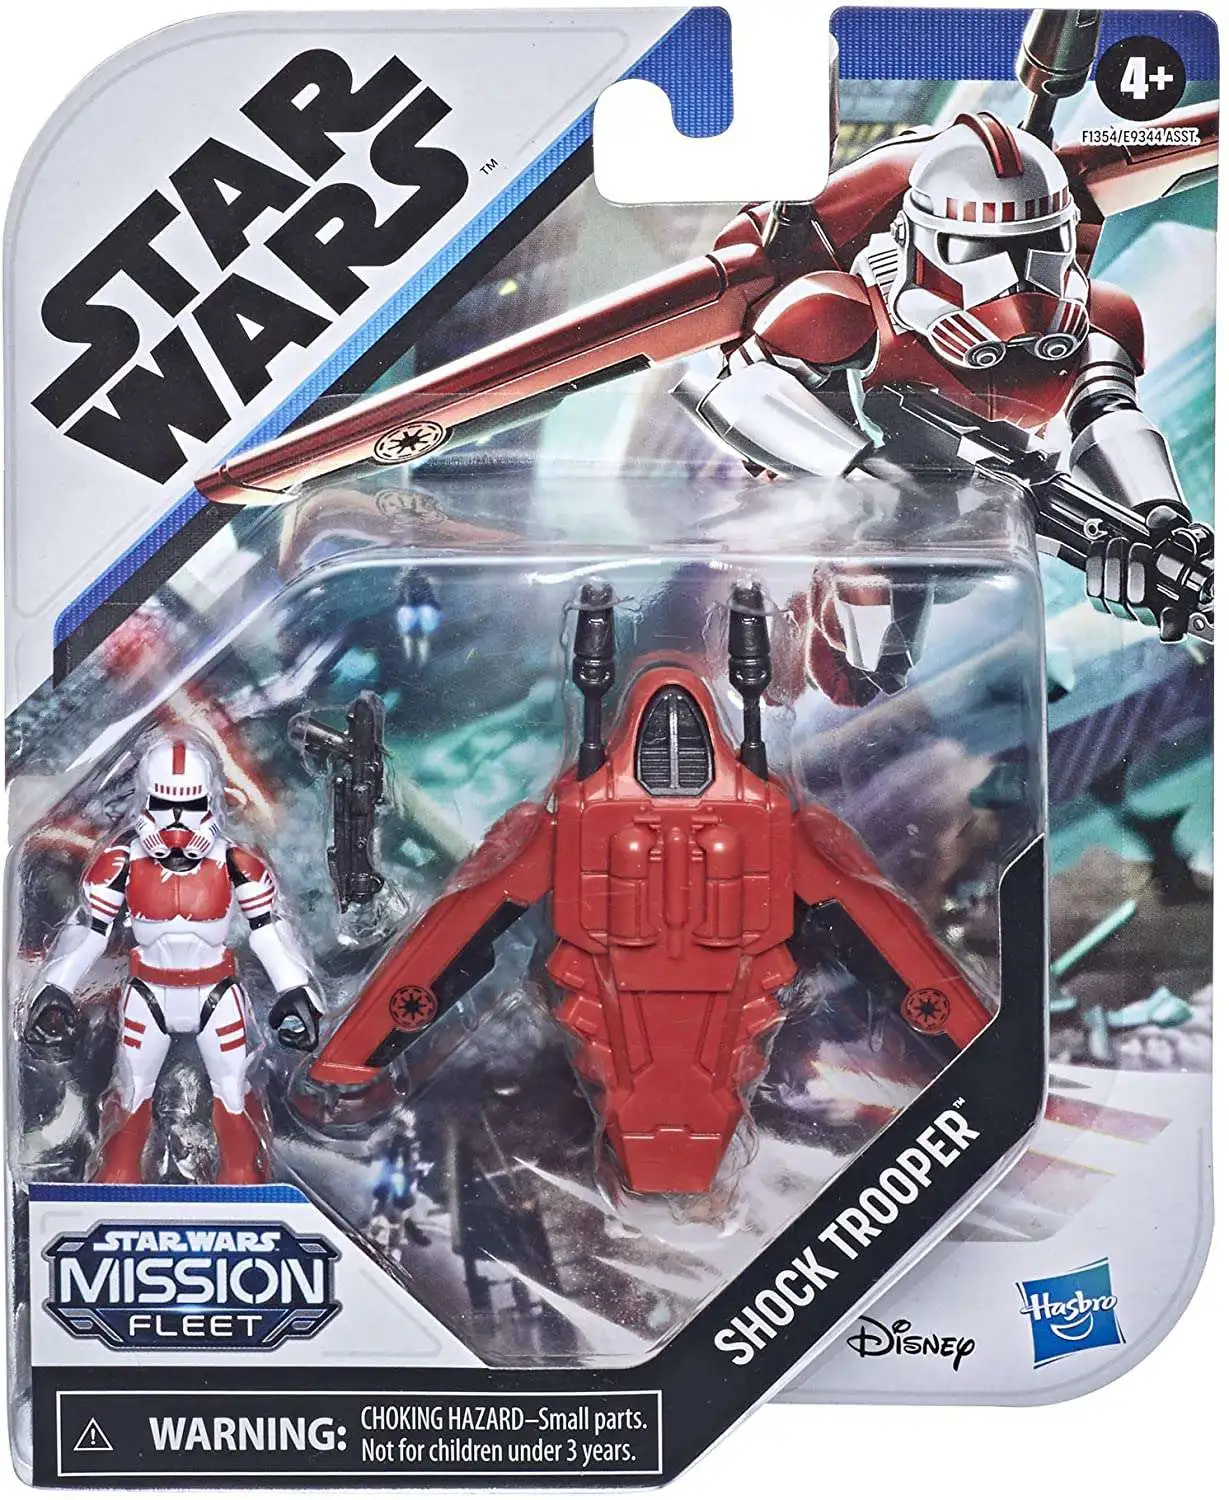 2020 Hasbro Disney Star Wars Mission Fleet Shock Trooper for sale online 